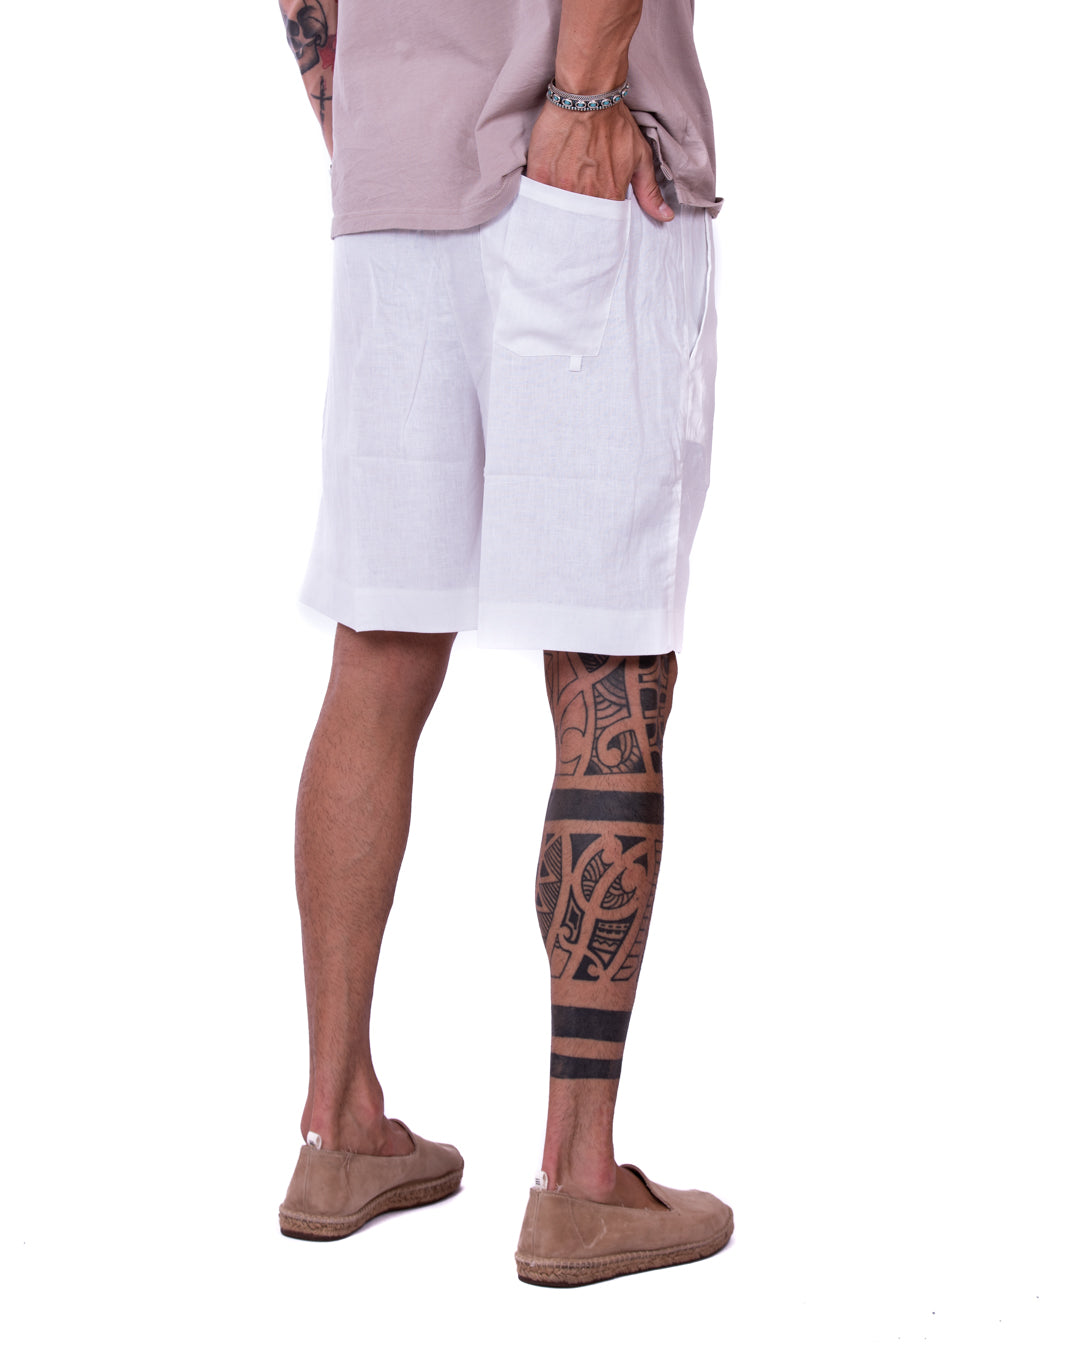 Larry - white linen Bermuda shorts